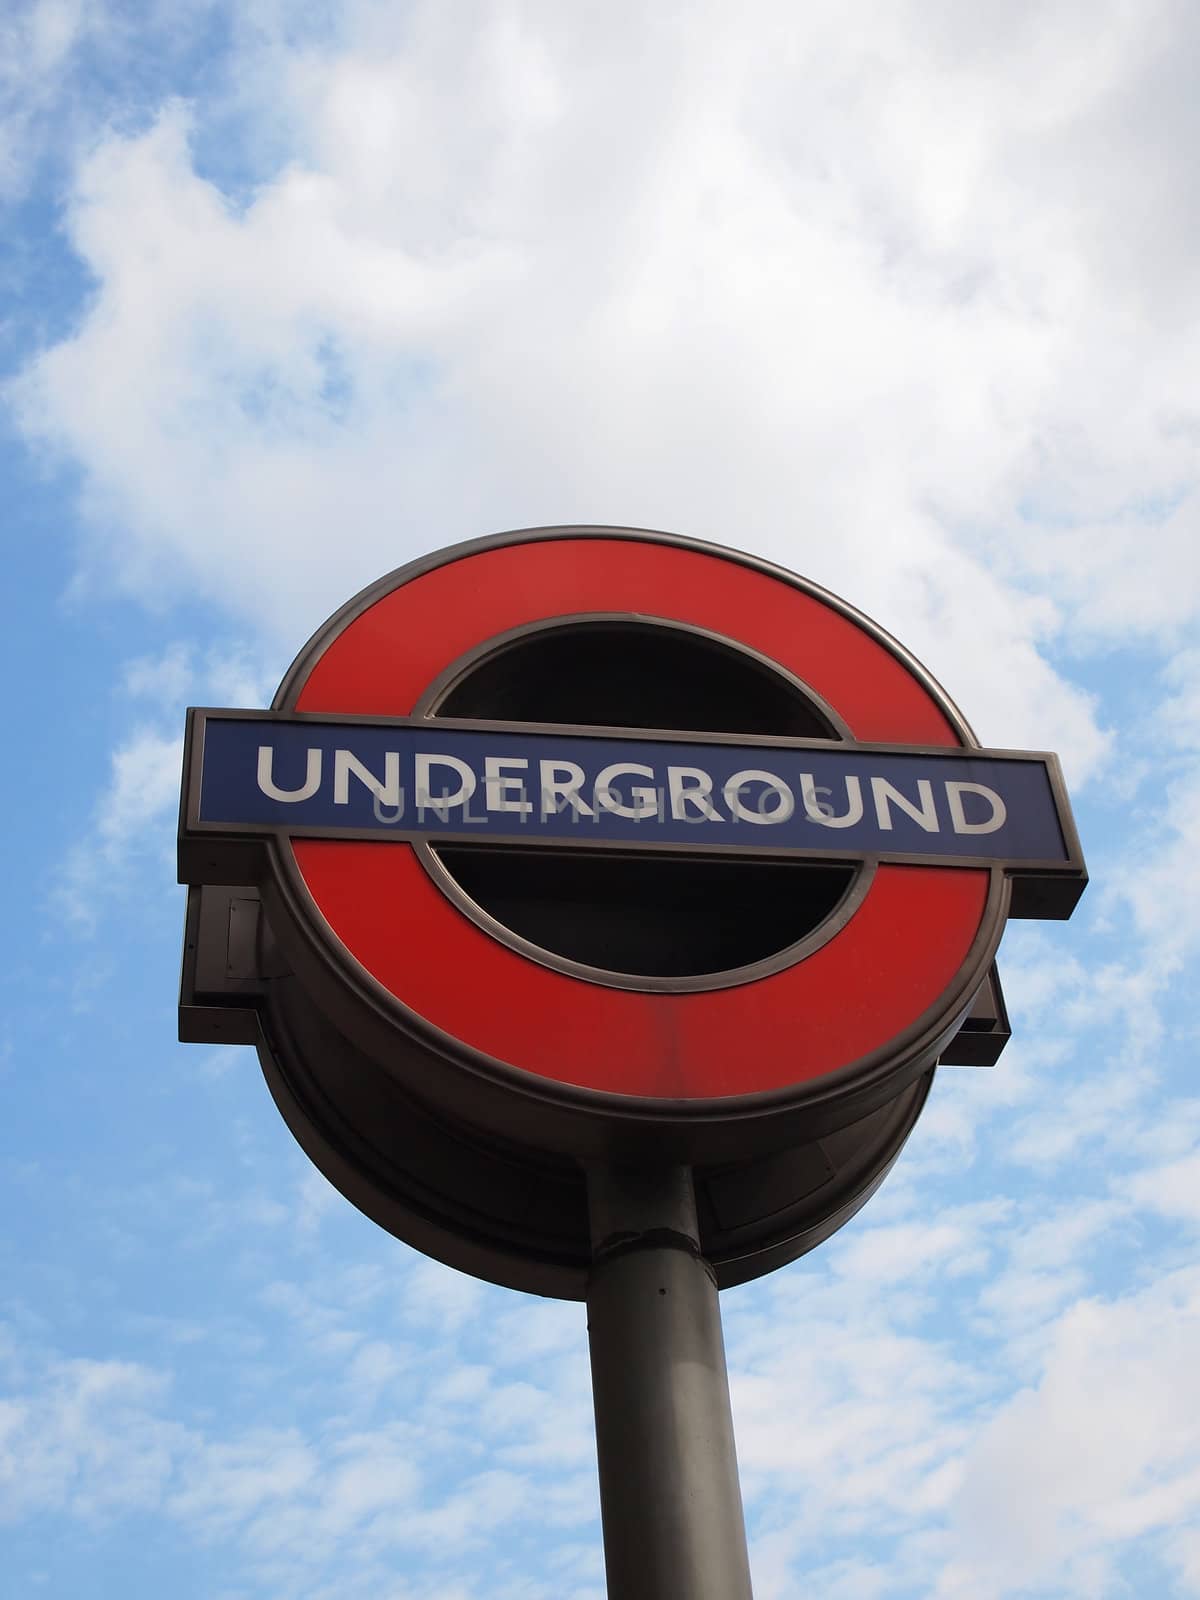 Typical London underground sign, UK.